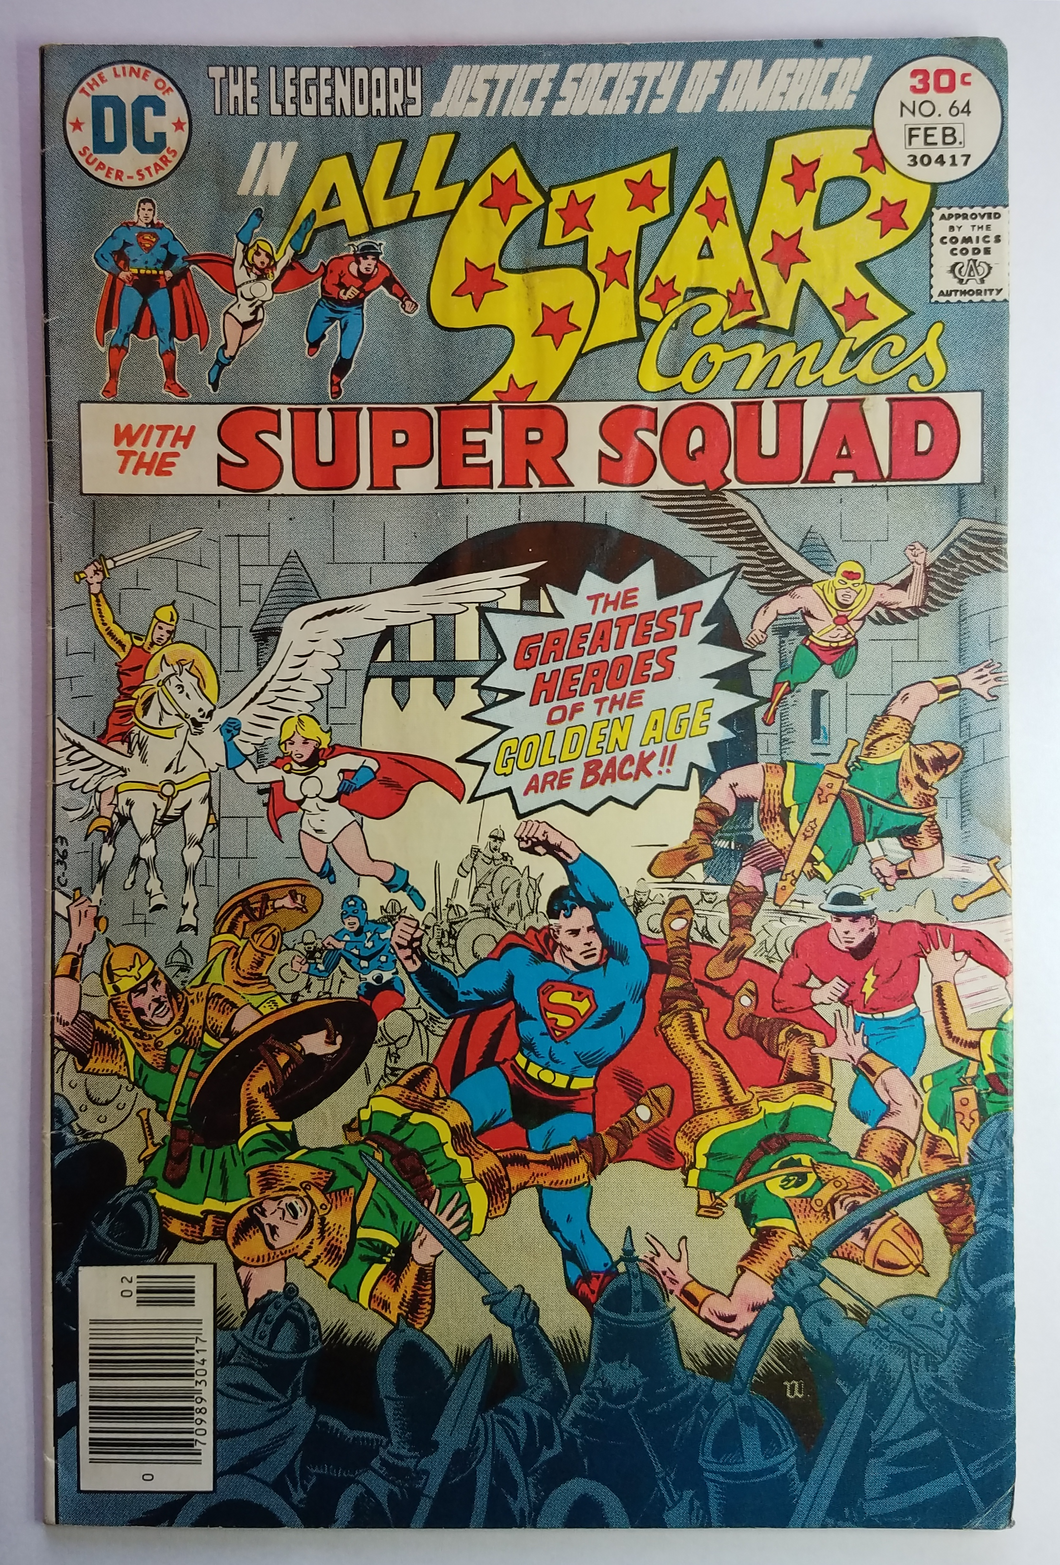 1977 DC All-Star Comics with Super Squad #64 Comic Book